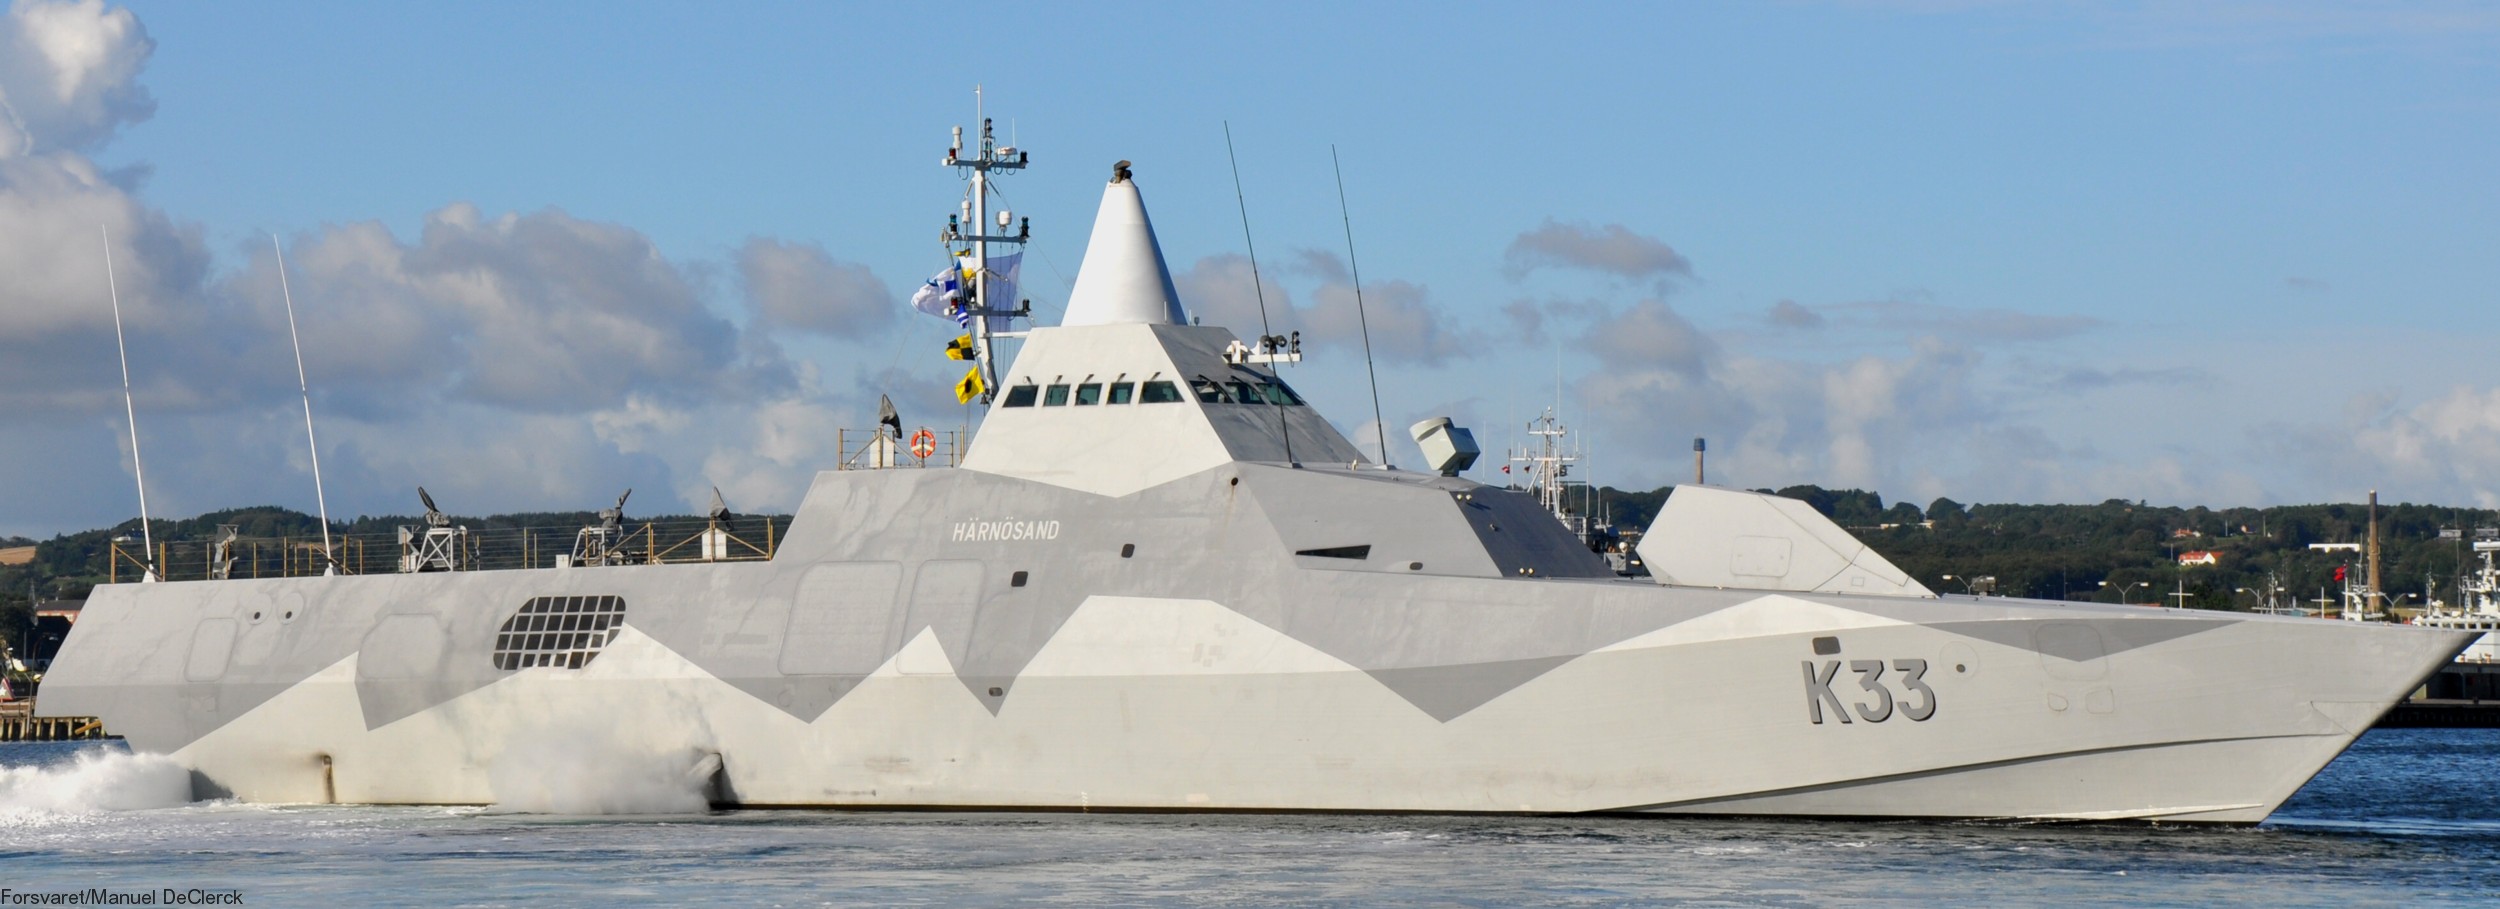 k33 hswms hms harnosand visby class corvette royal swedish navy svenska marinen 12